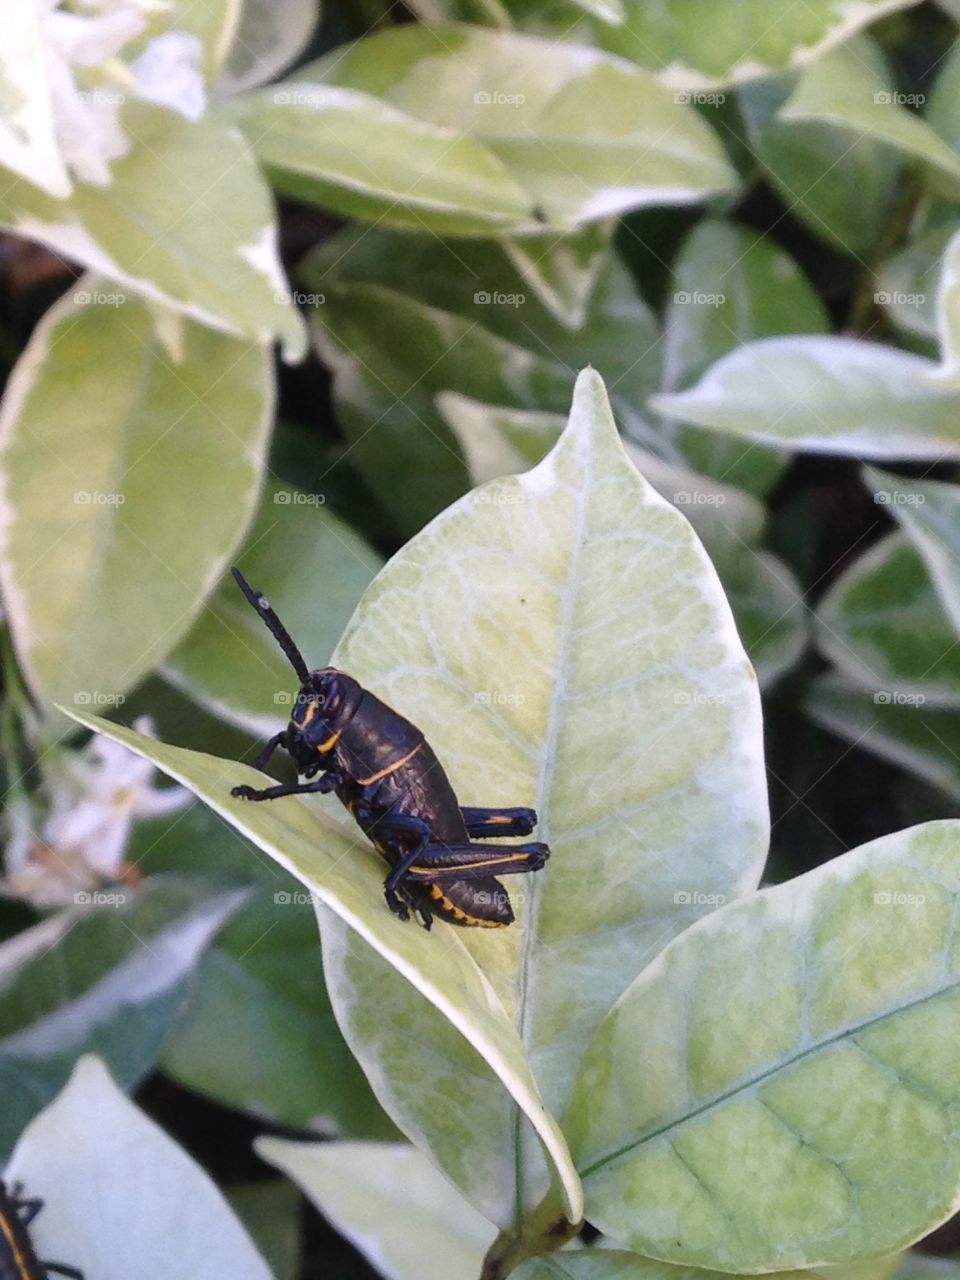 Grasshopper on leaf